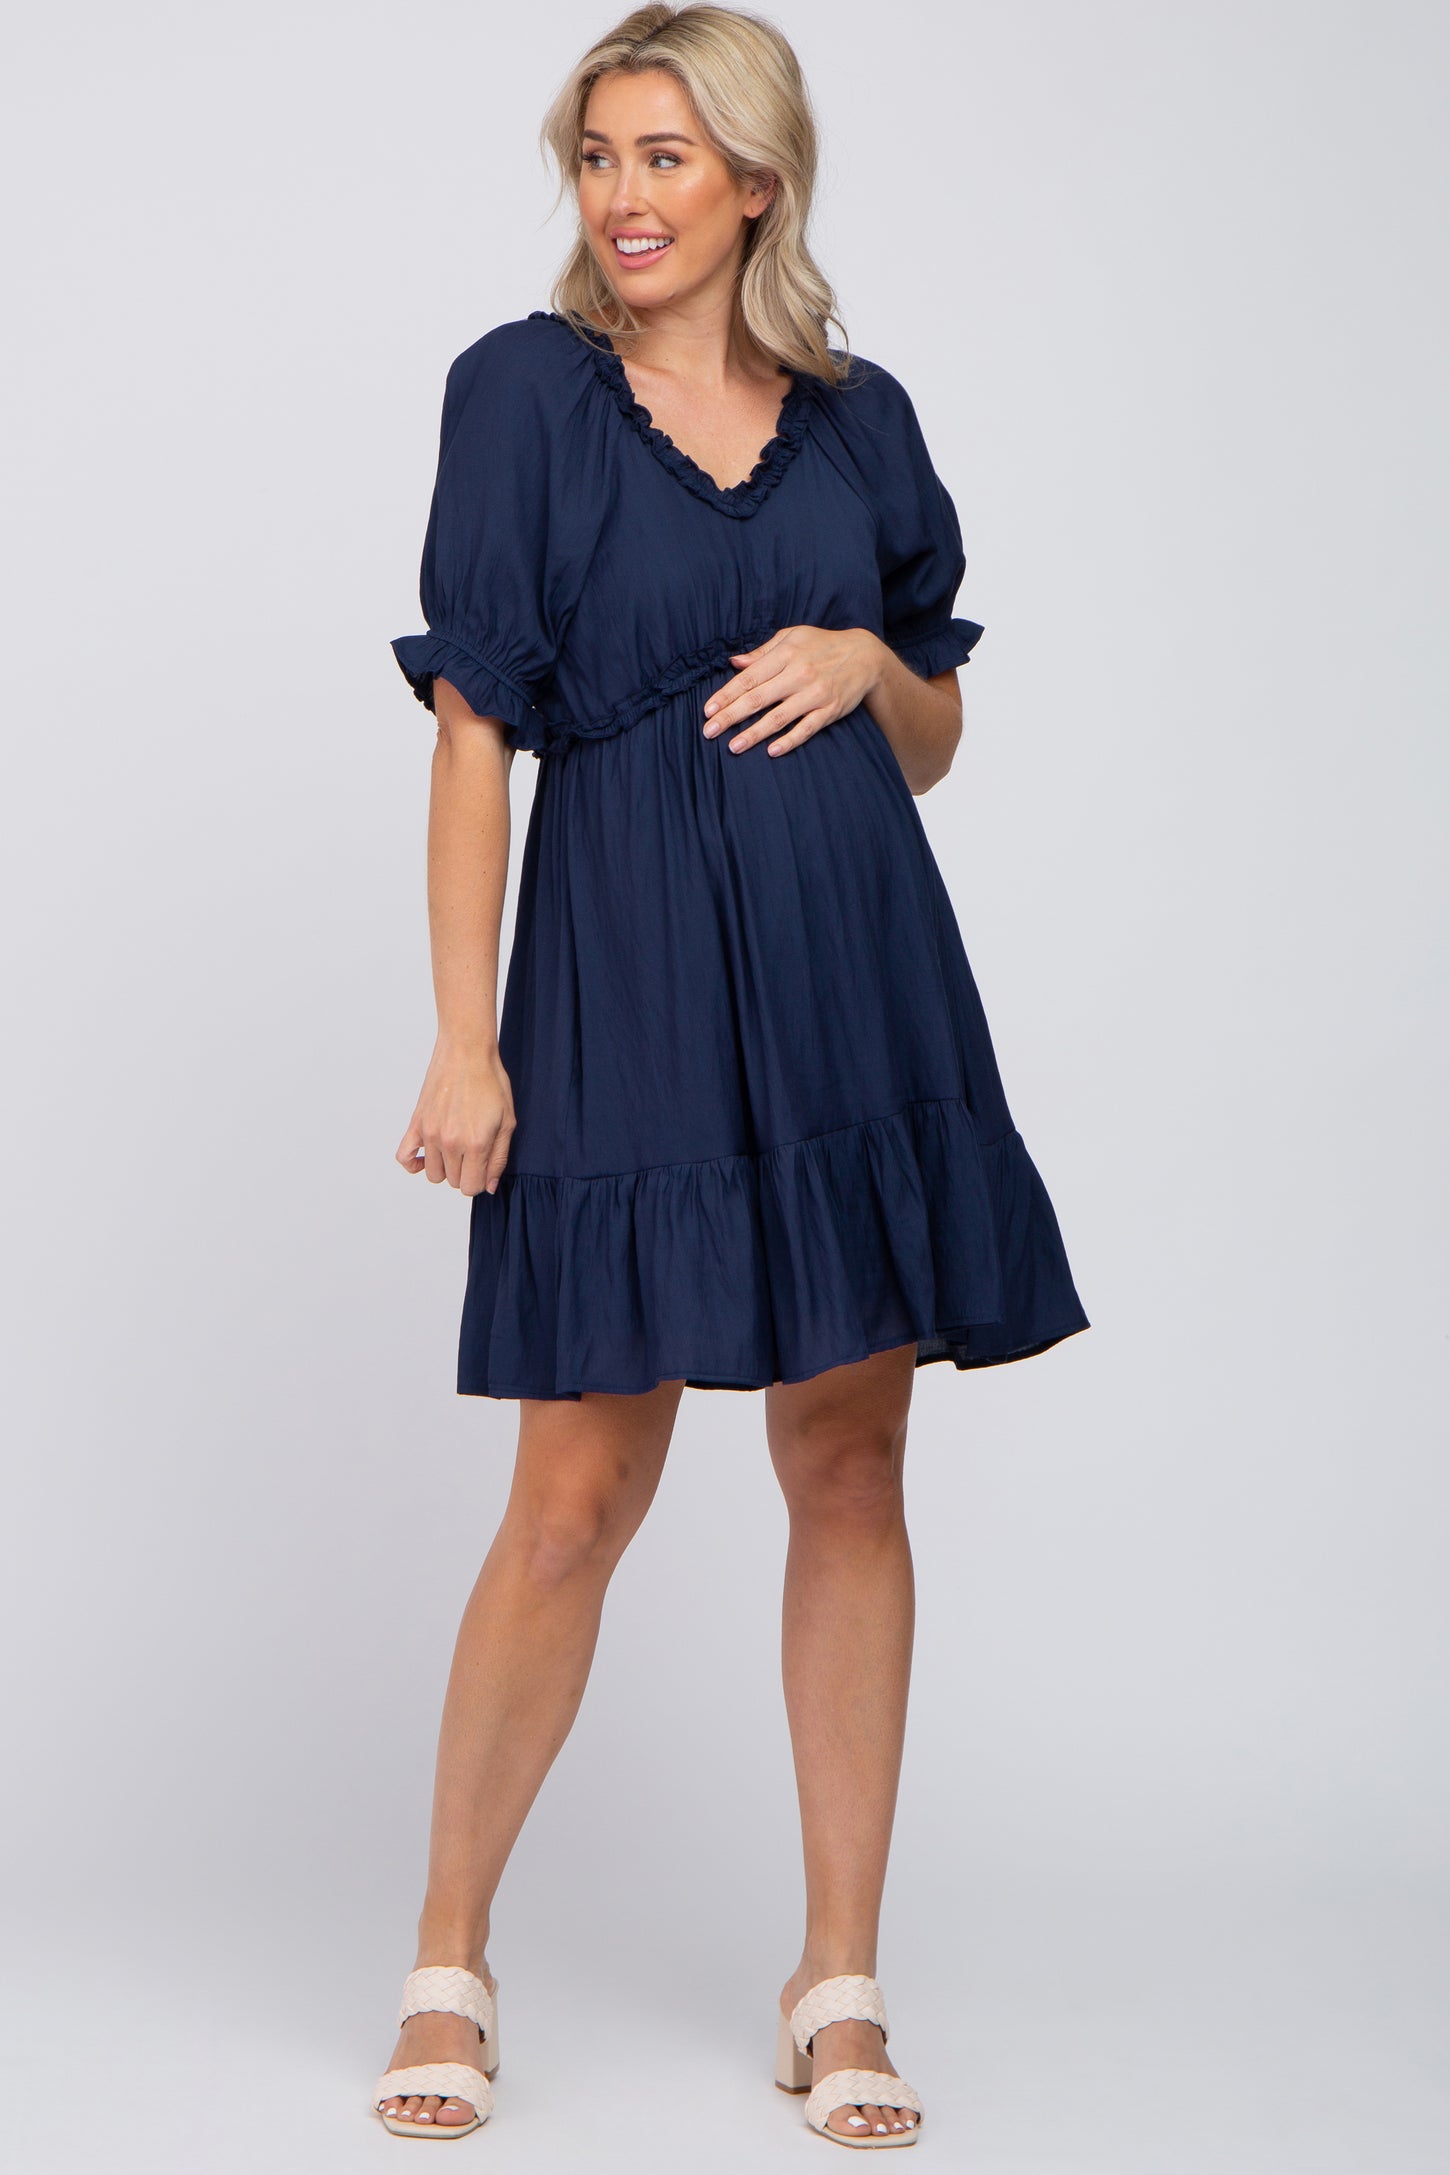 Navy Ruffle Accent Maternity Dress